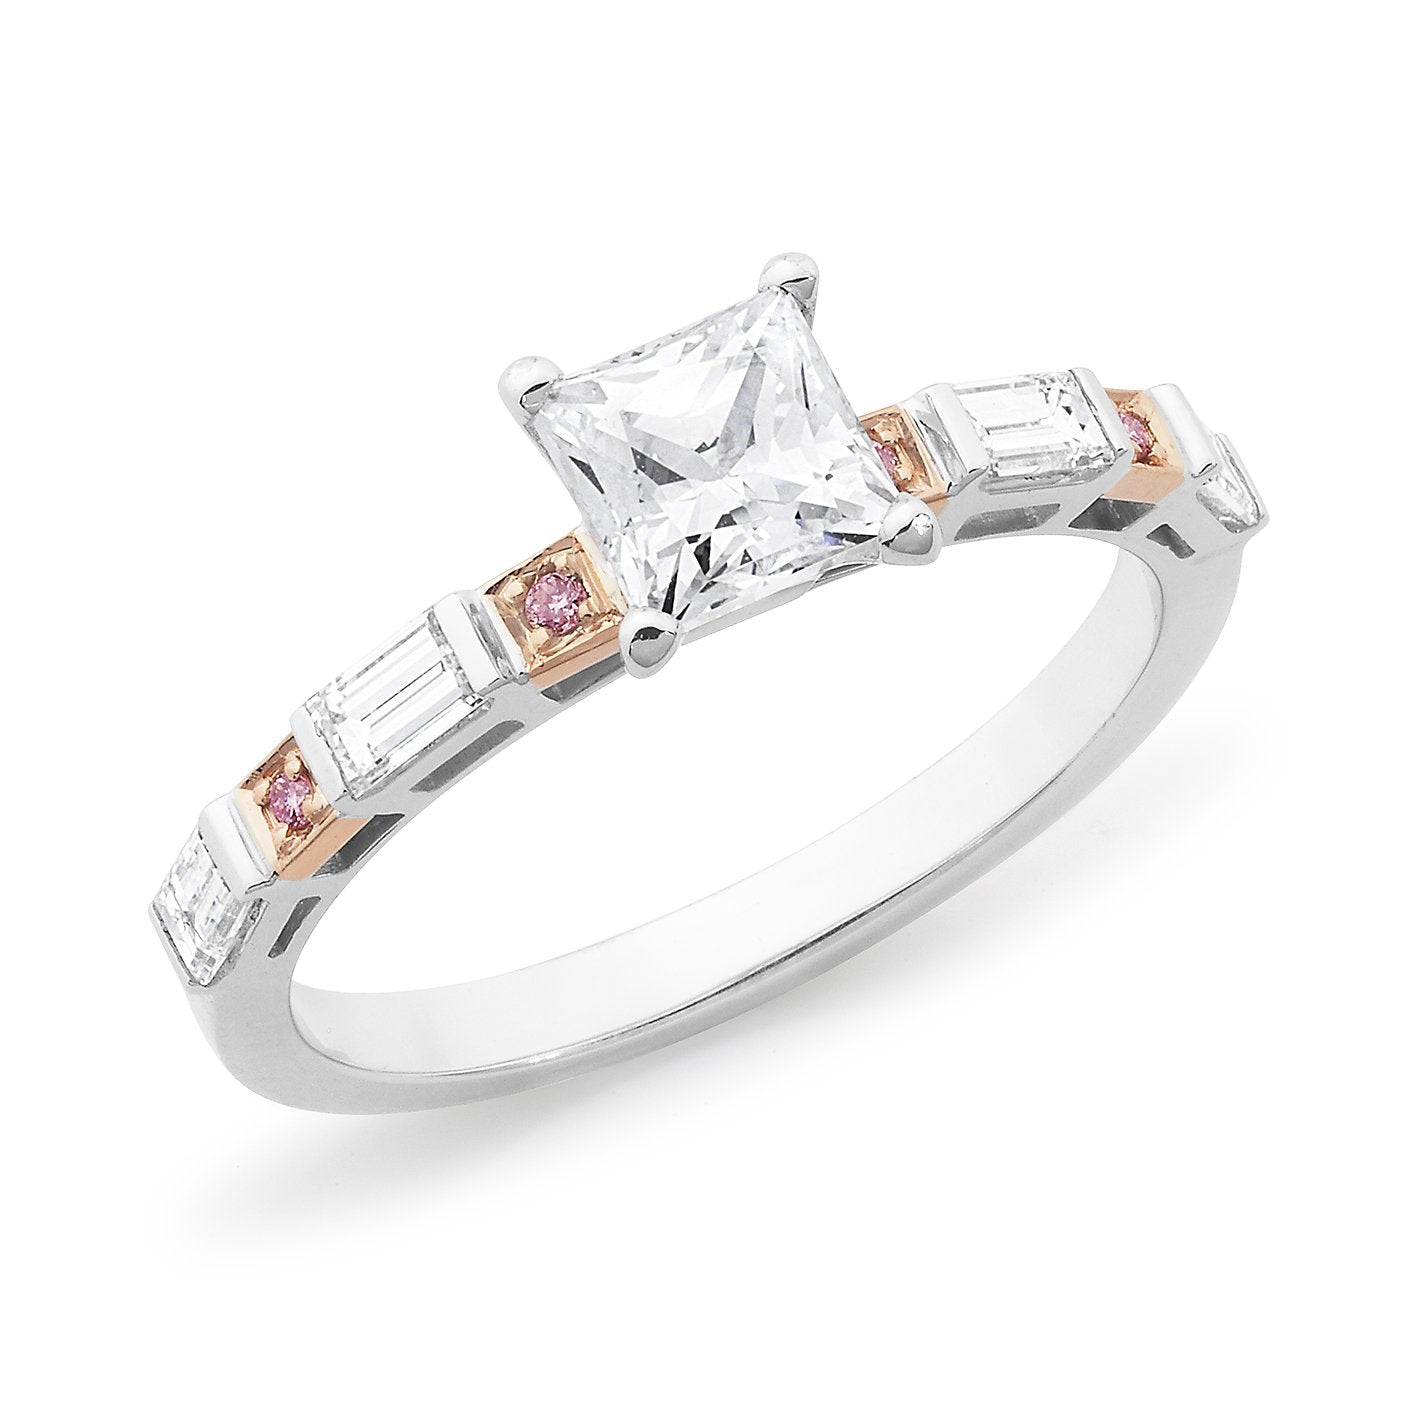 PINK CAVIAR 1.09ct White Princess Cut & Pink Engagement Diamond Ring in 18ct White Gold